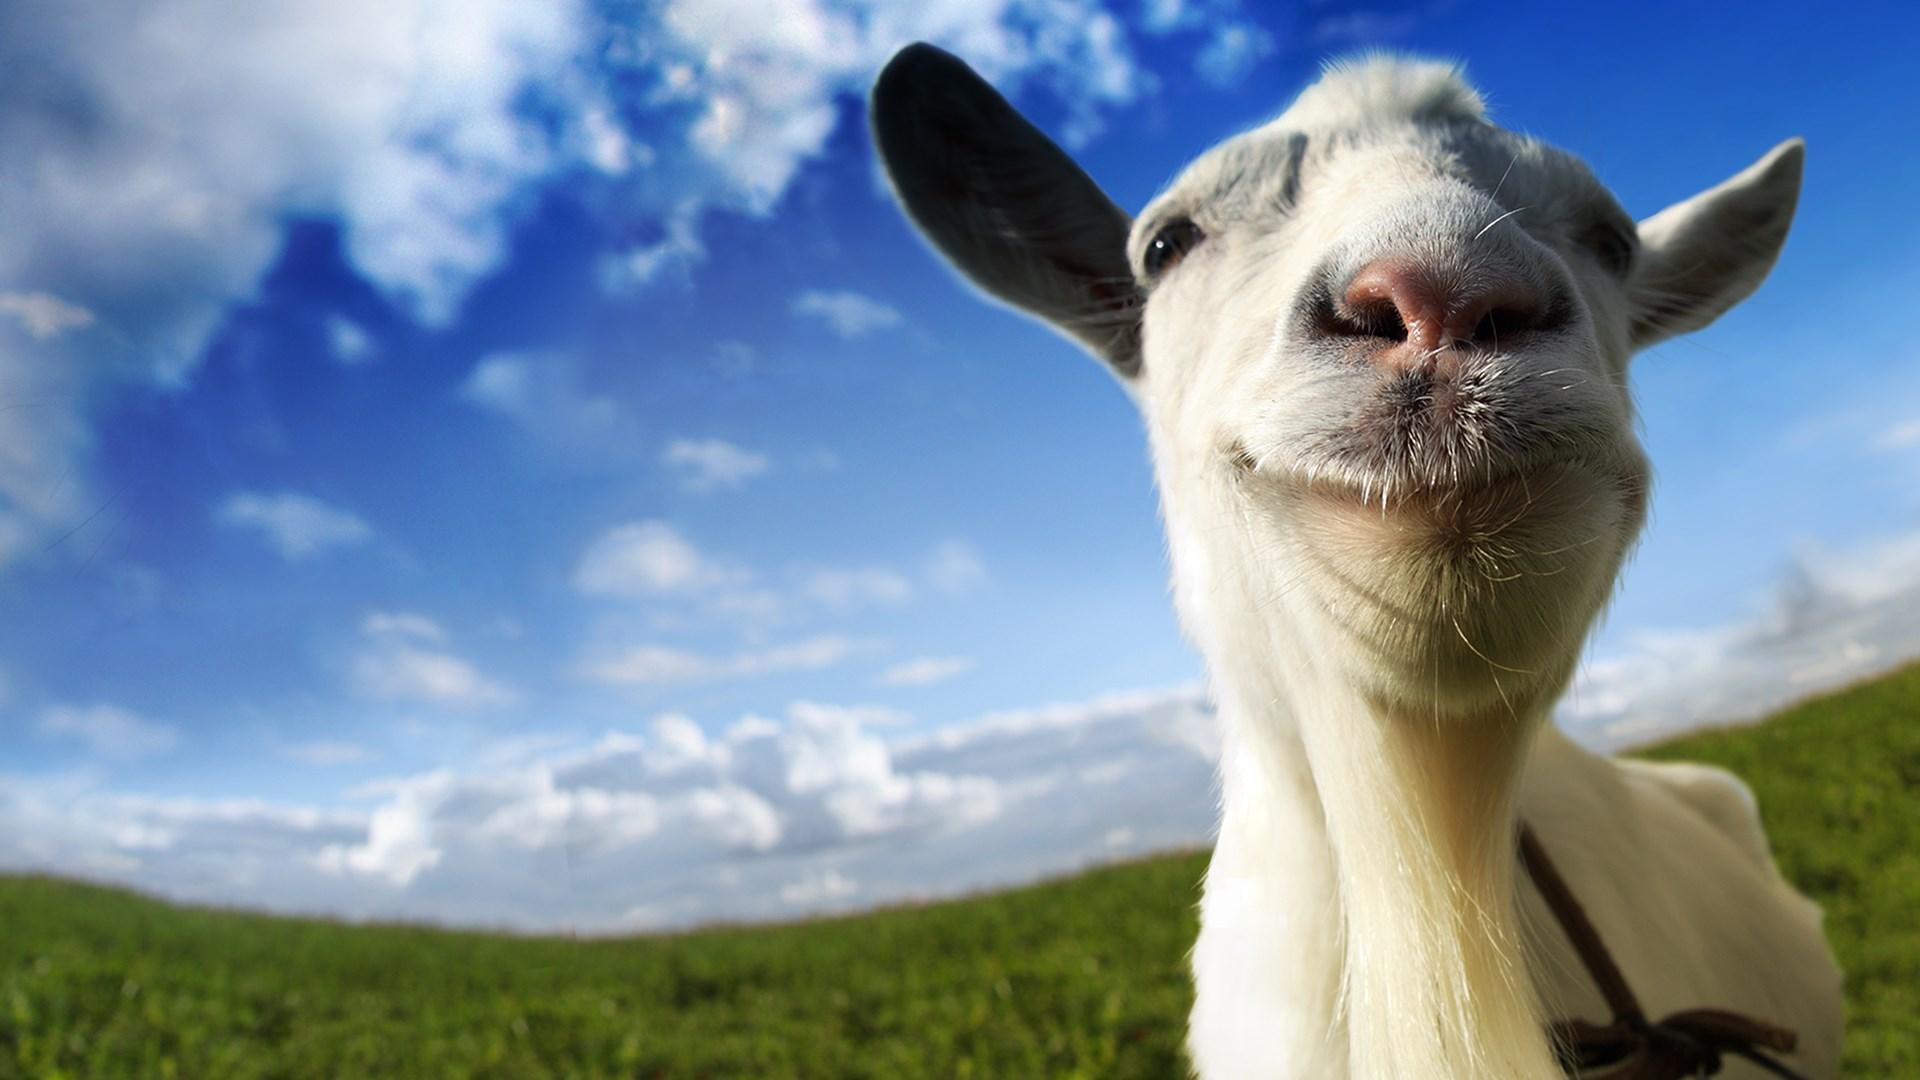 goat simulator free download pc windows 10